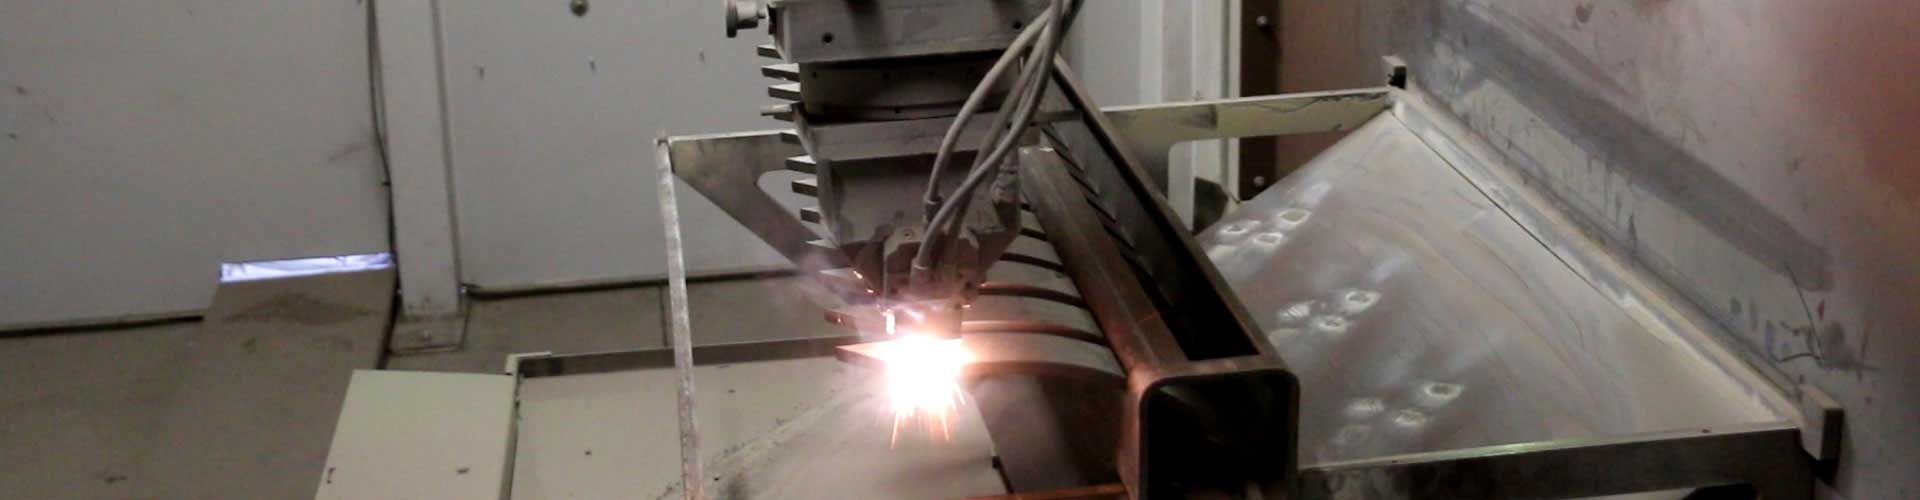 Laser Cladding an ag tool at Moose Laser Weld